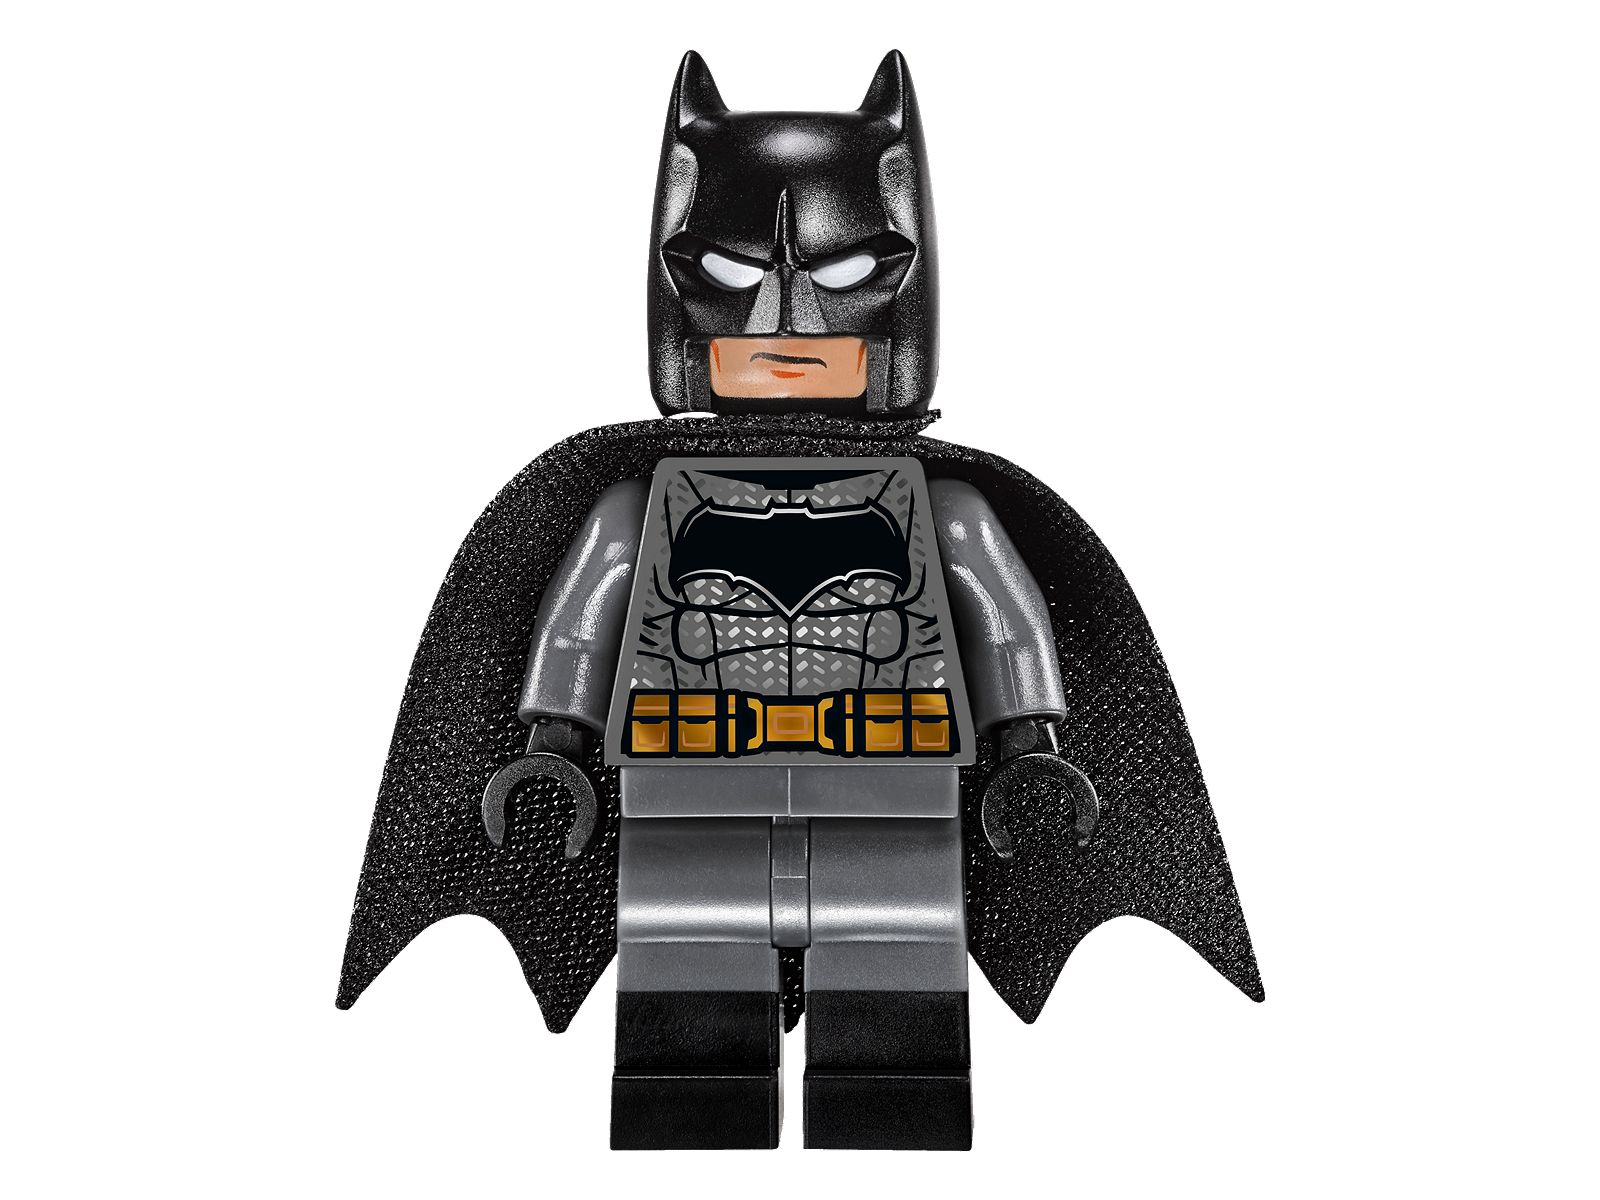 Lego Web Site Posted Official Images of Batman V Superman ...